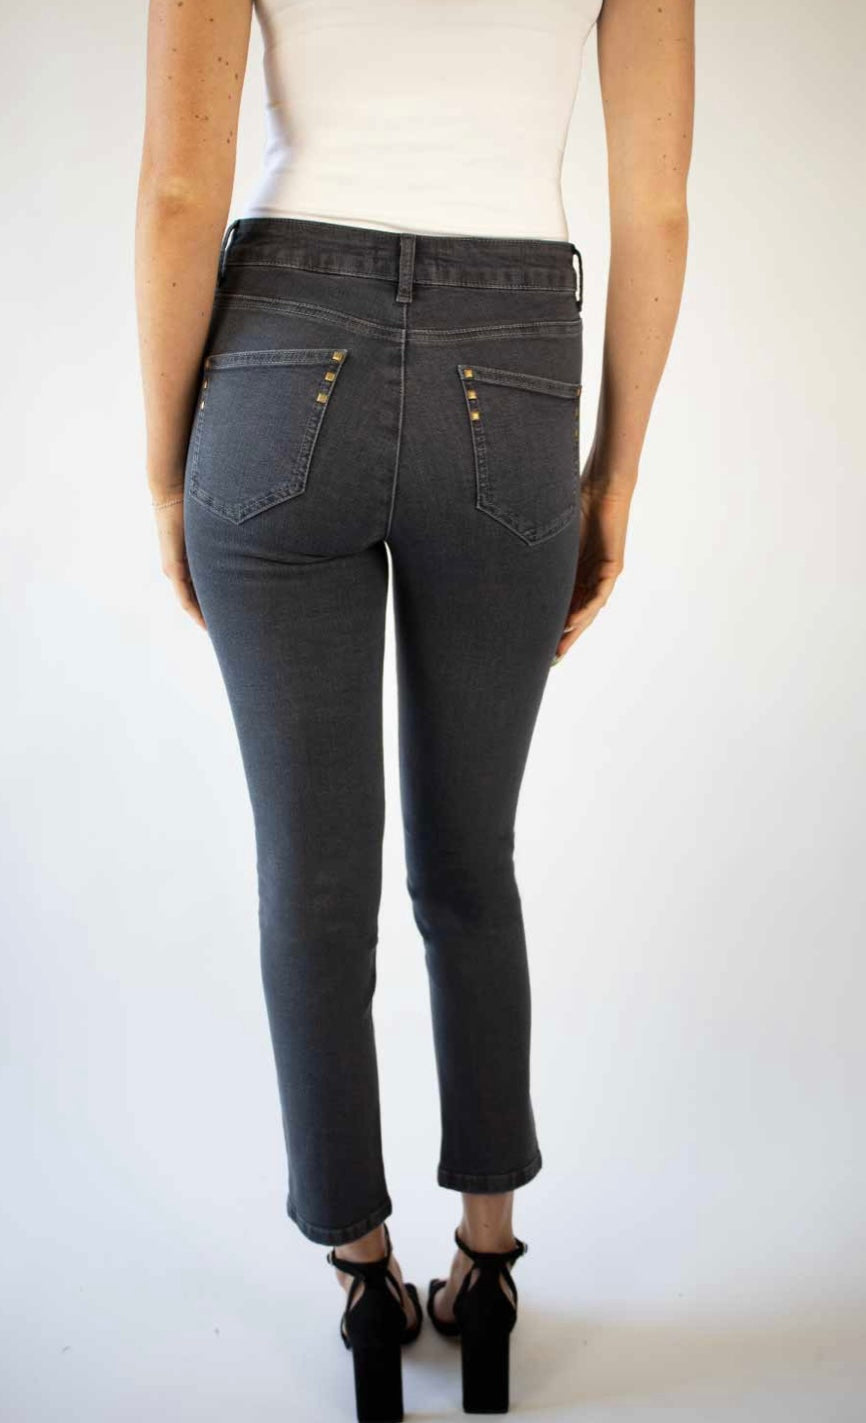 Victoria Grey jeans